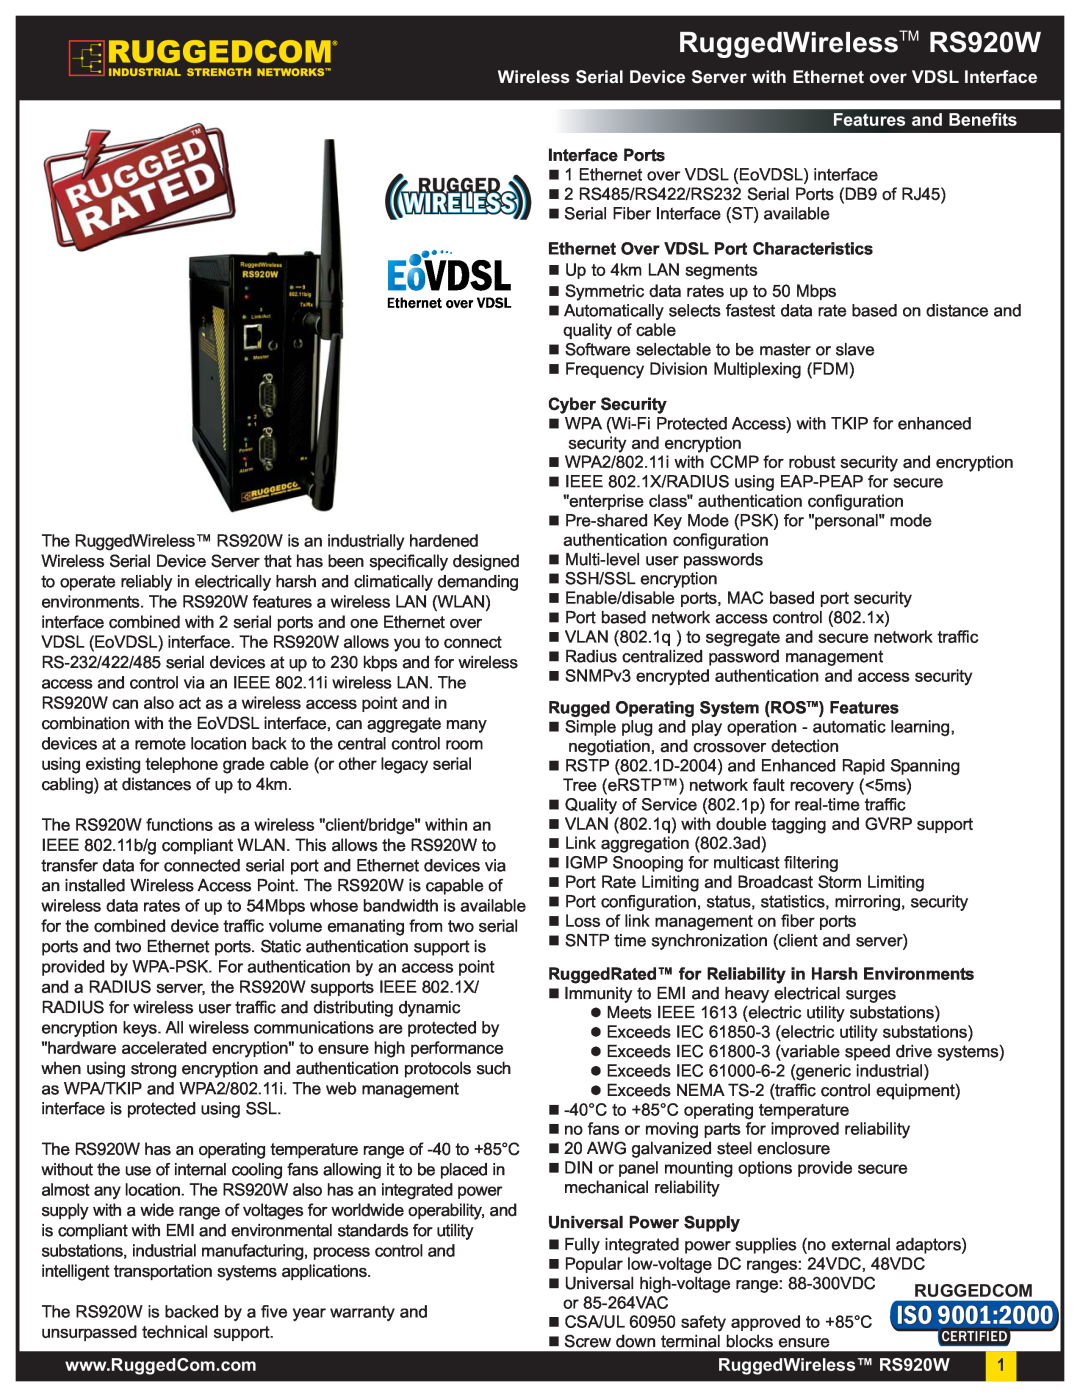 RuggedCom warranty RuggedWirelessTM RS920W, Wireless Serial Device Server with Ethernet over VDSL Interface 